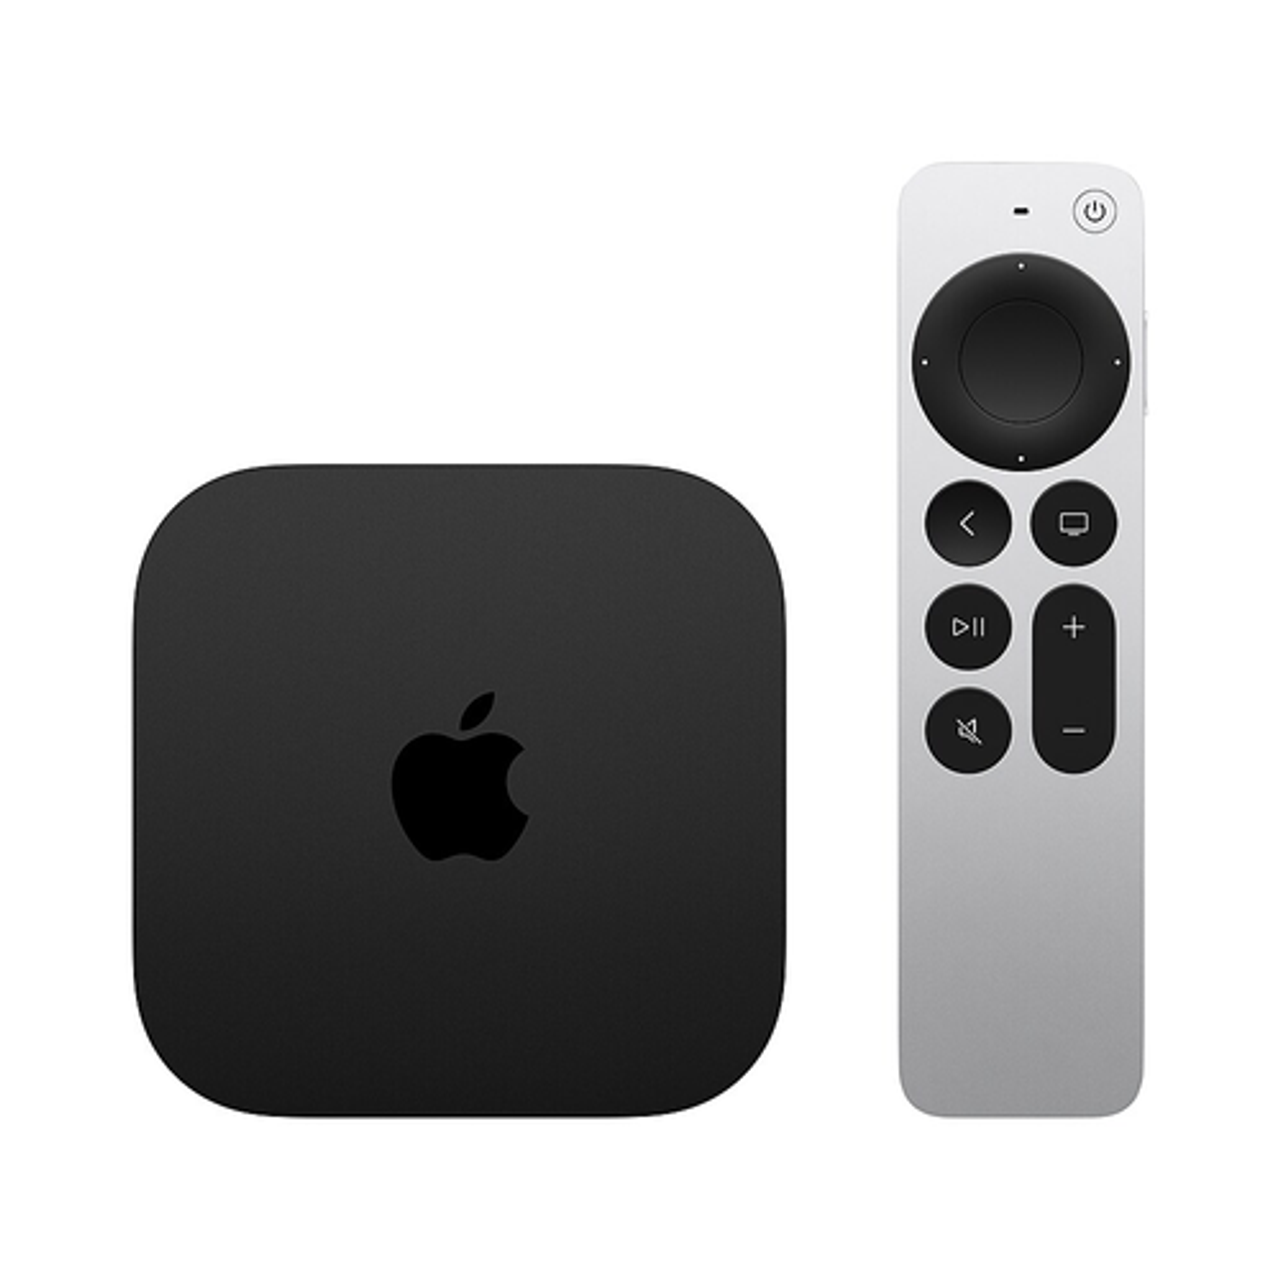 Apple TV 4K (3rd generation)(Latest Model) - Wi-Fi + Ethernet - Black